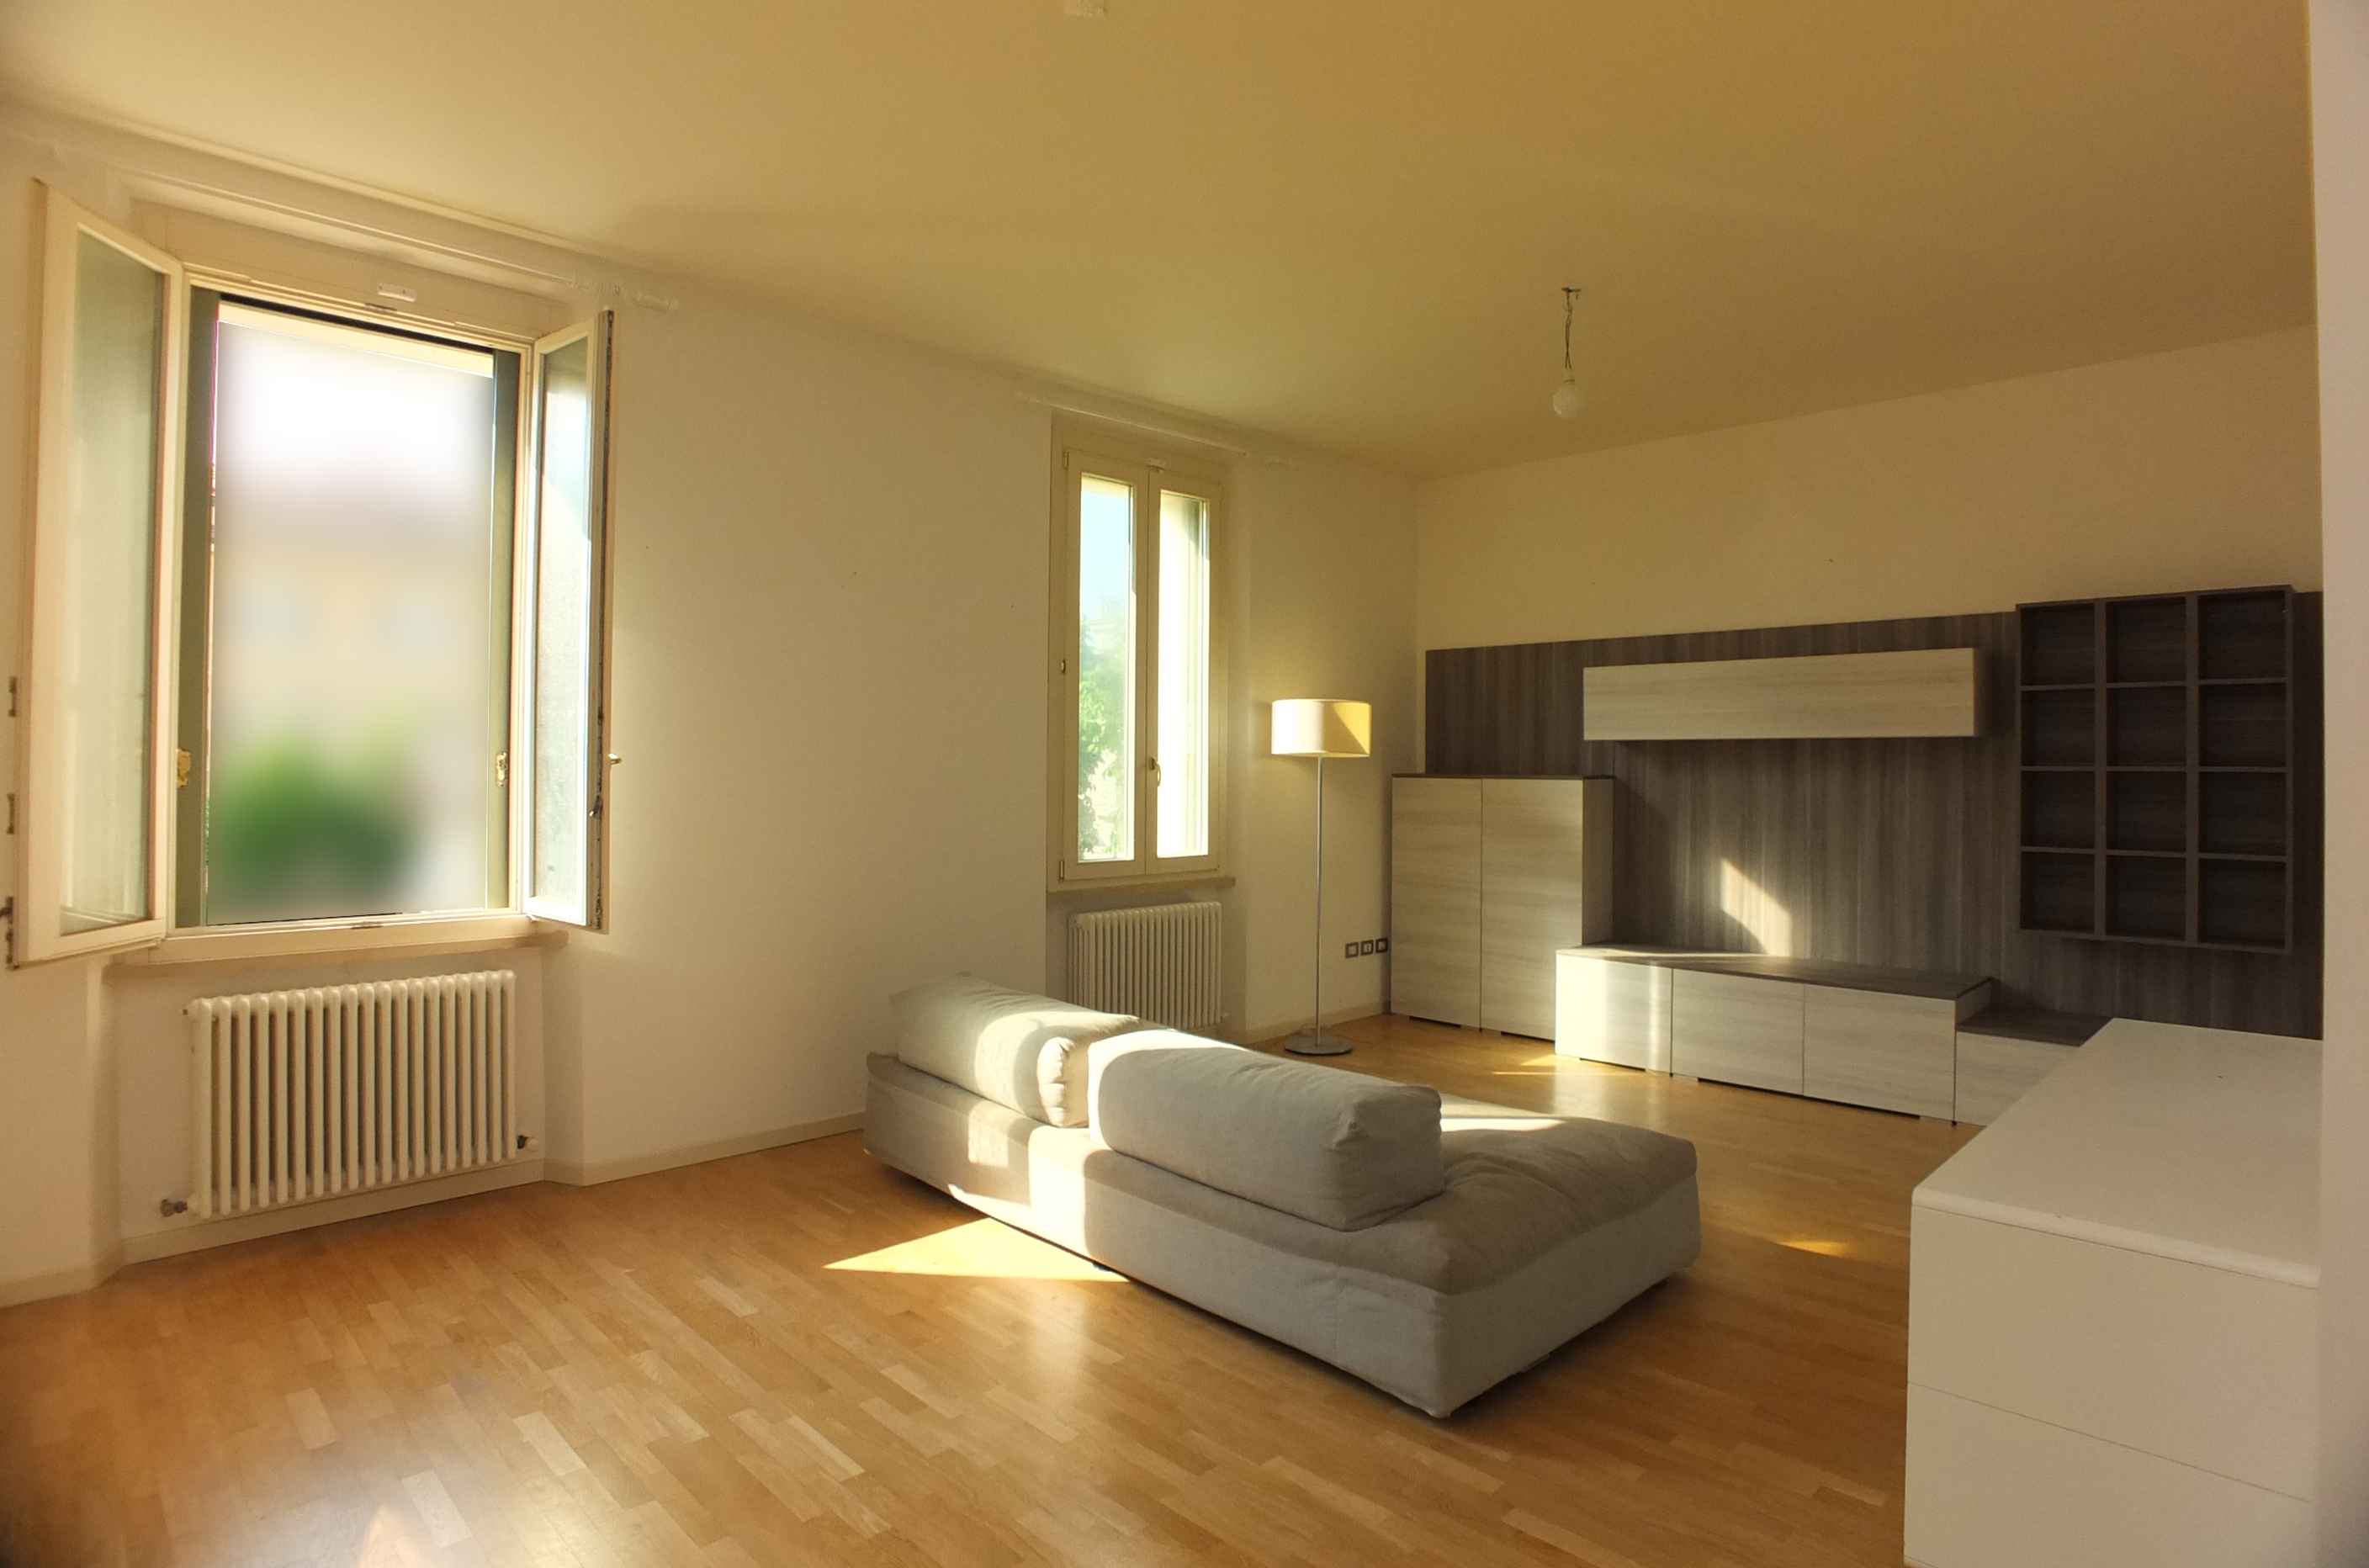 Vendesi signorile appartamento in villa Pesaro - Zona mare (AP056)